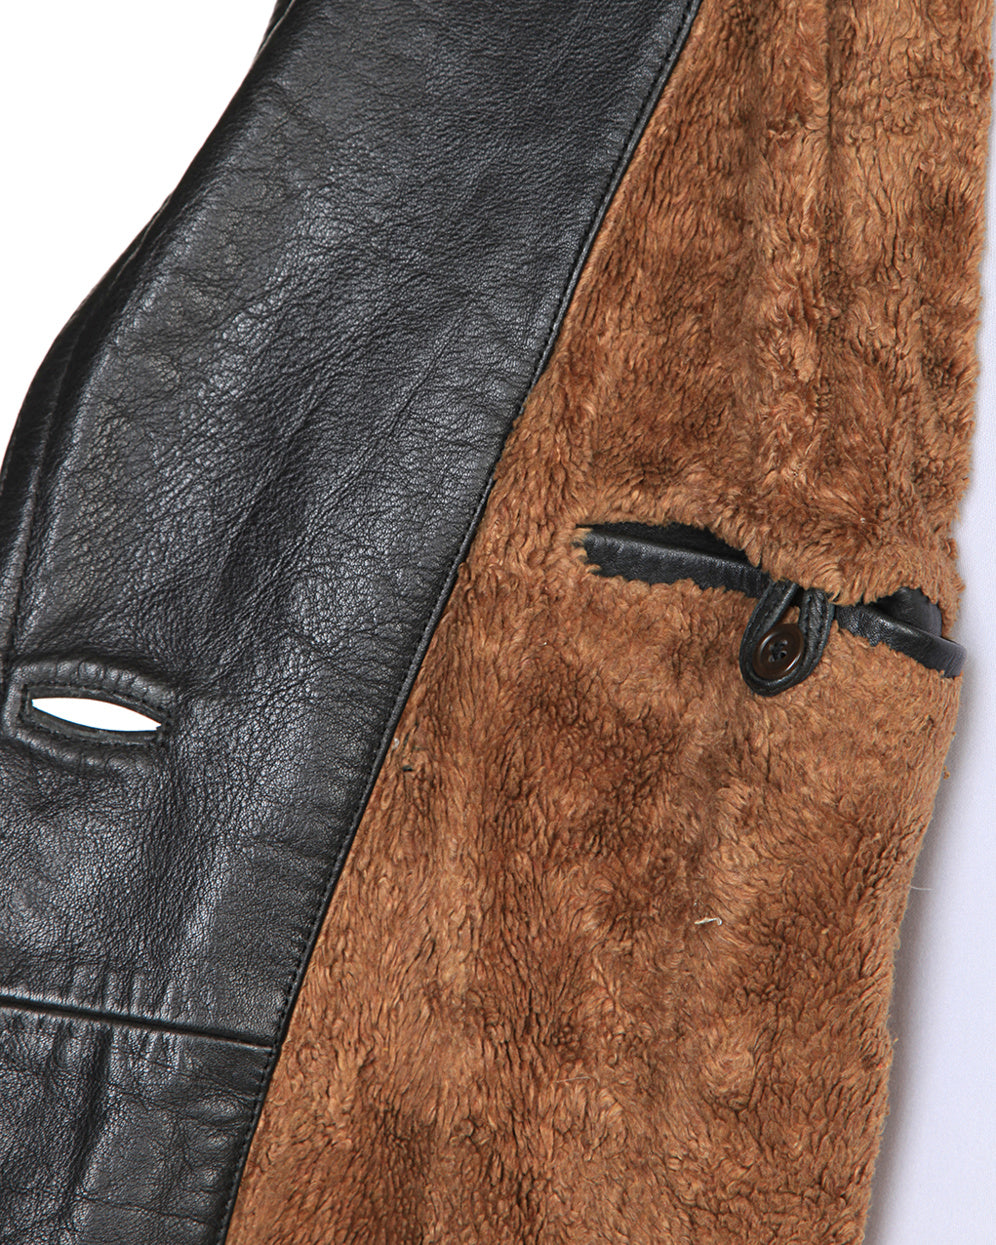 Armani Black Sheepskin Leather & Furlined Jacket - L